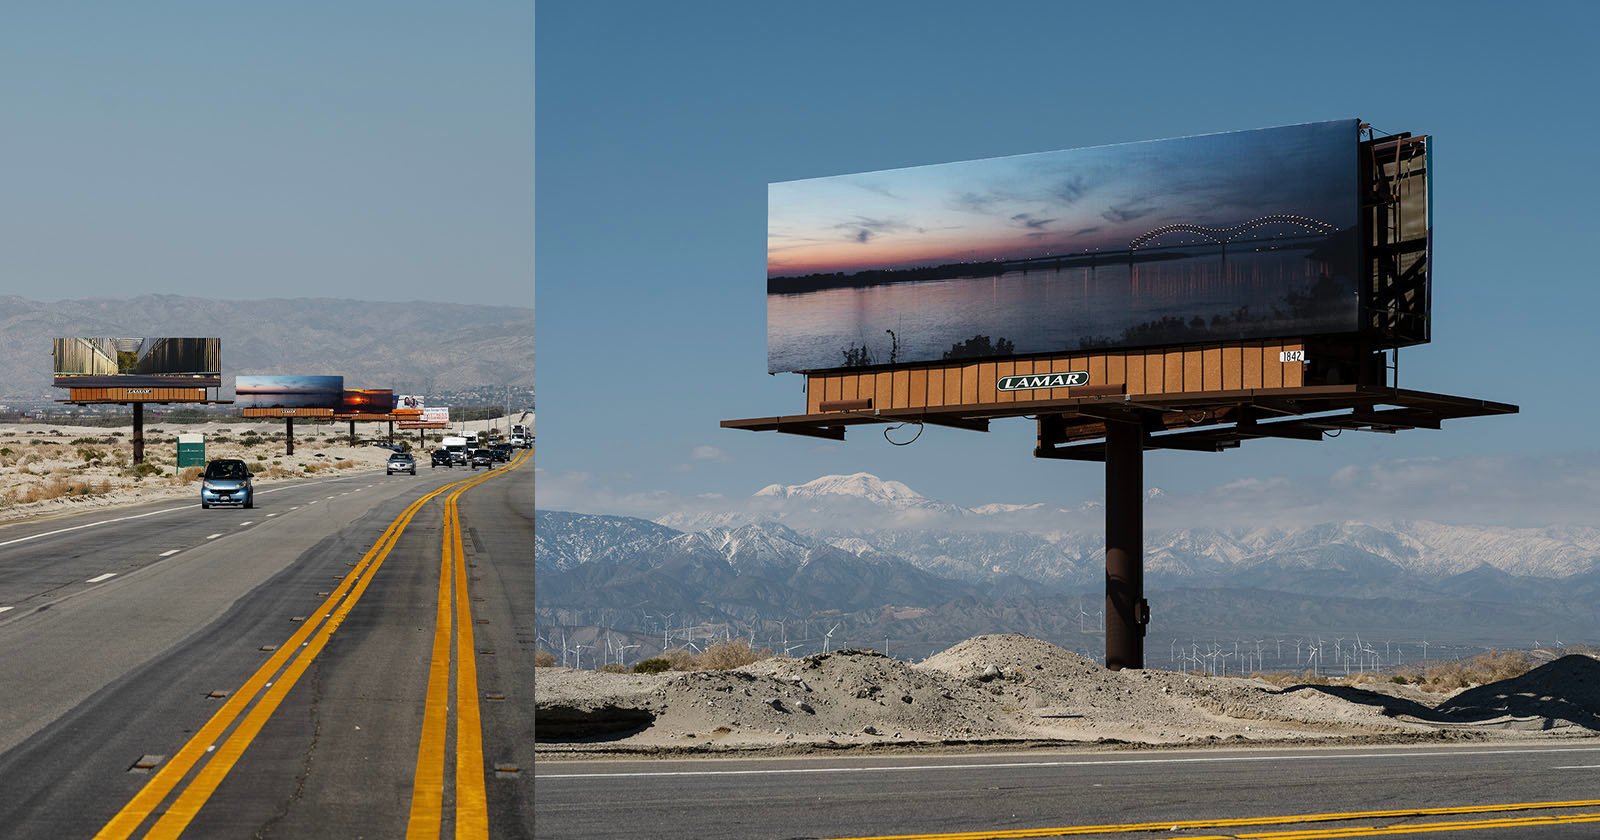  tyre nichols photography featured californian desert billboard exhibition 